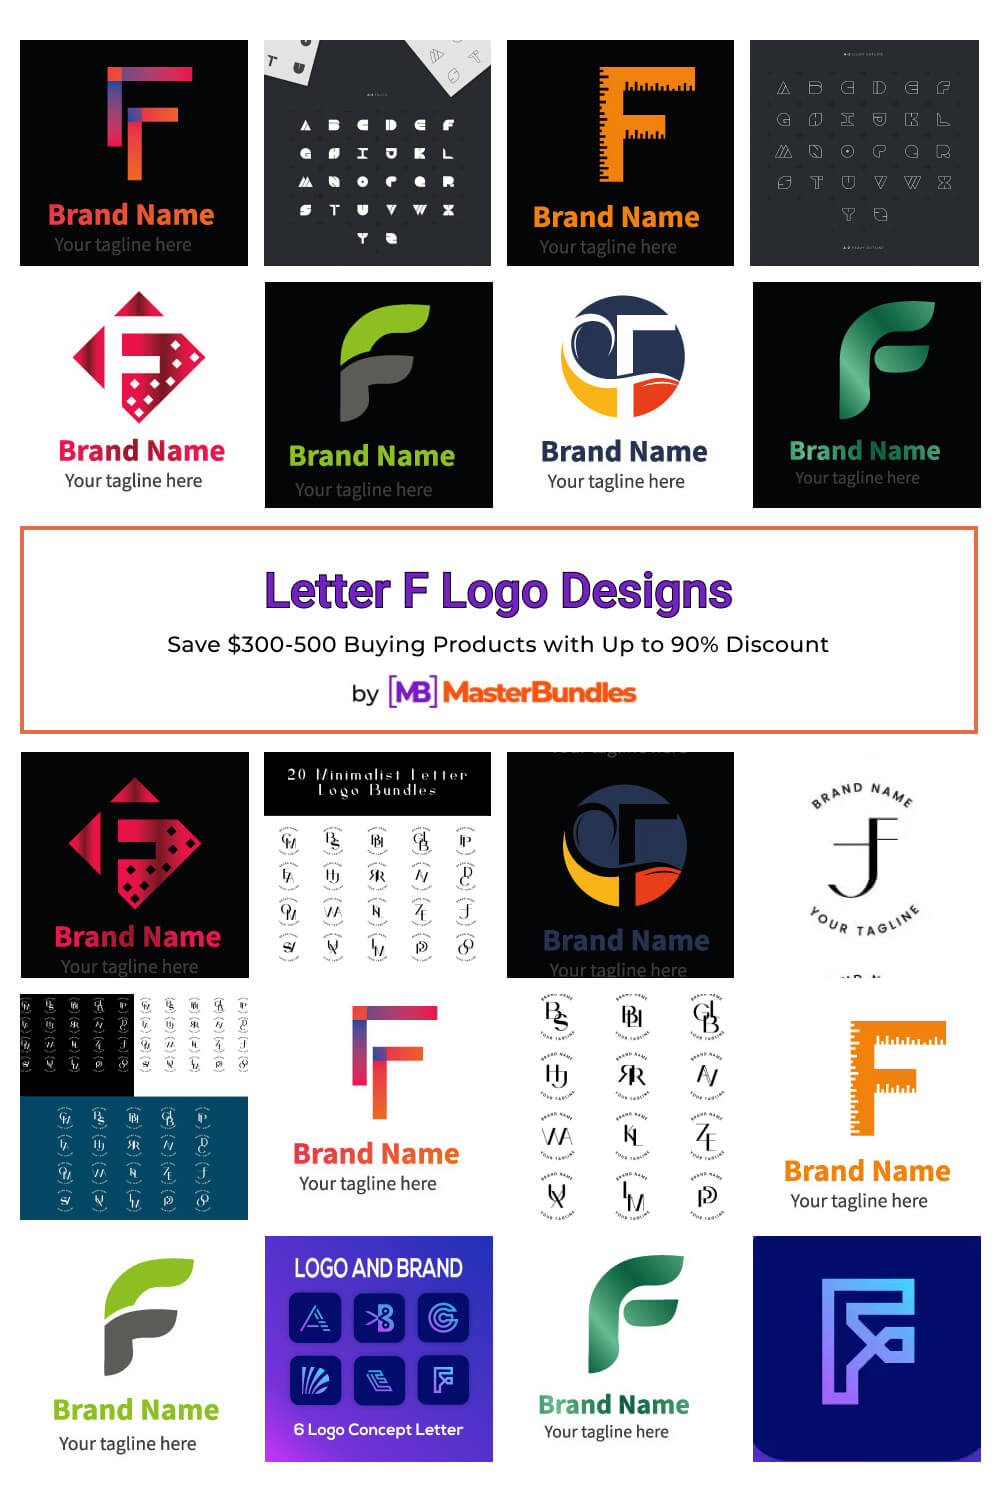 letter f logo designs pinterest image.